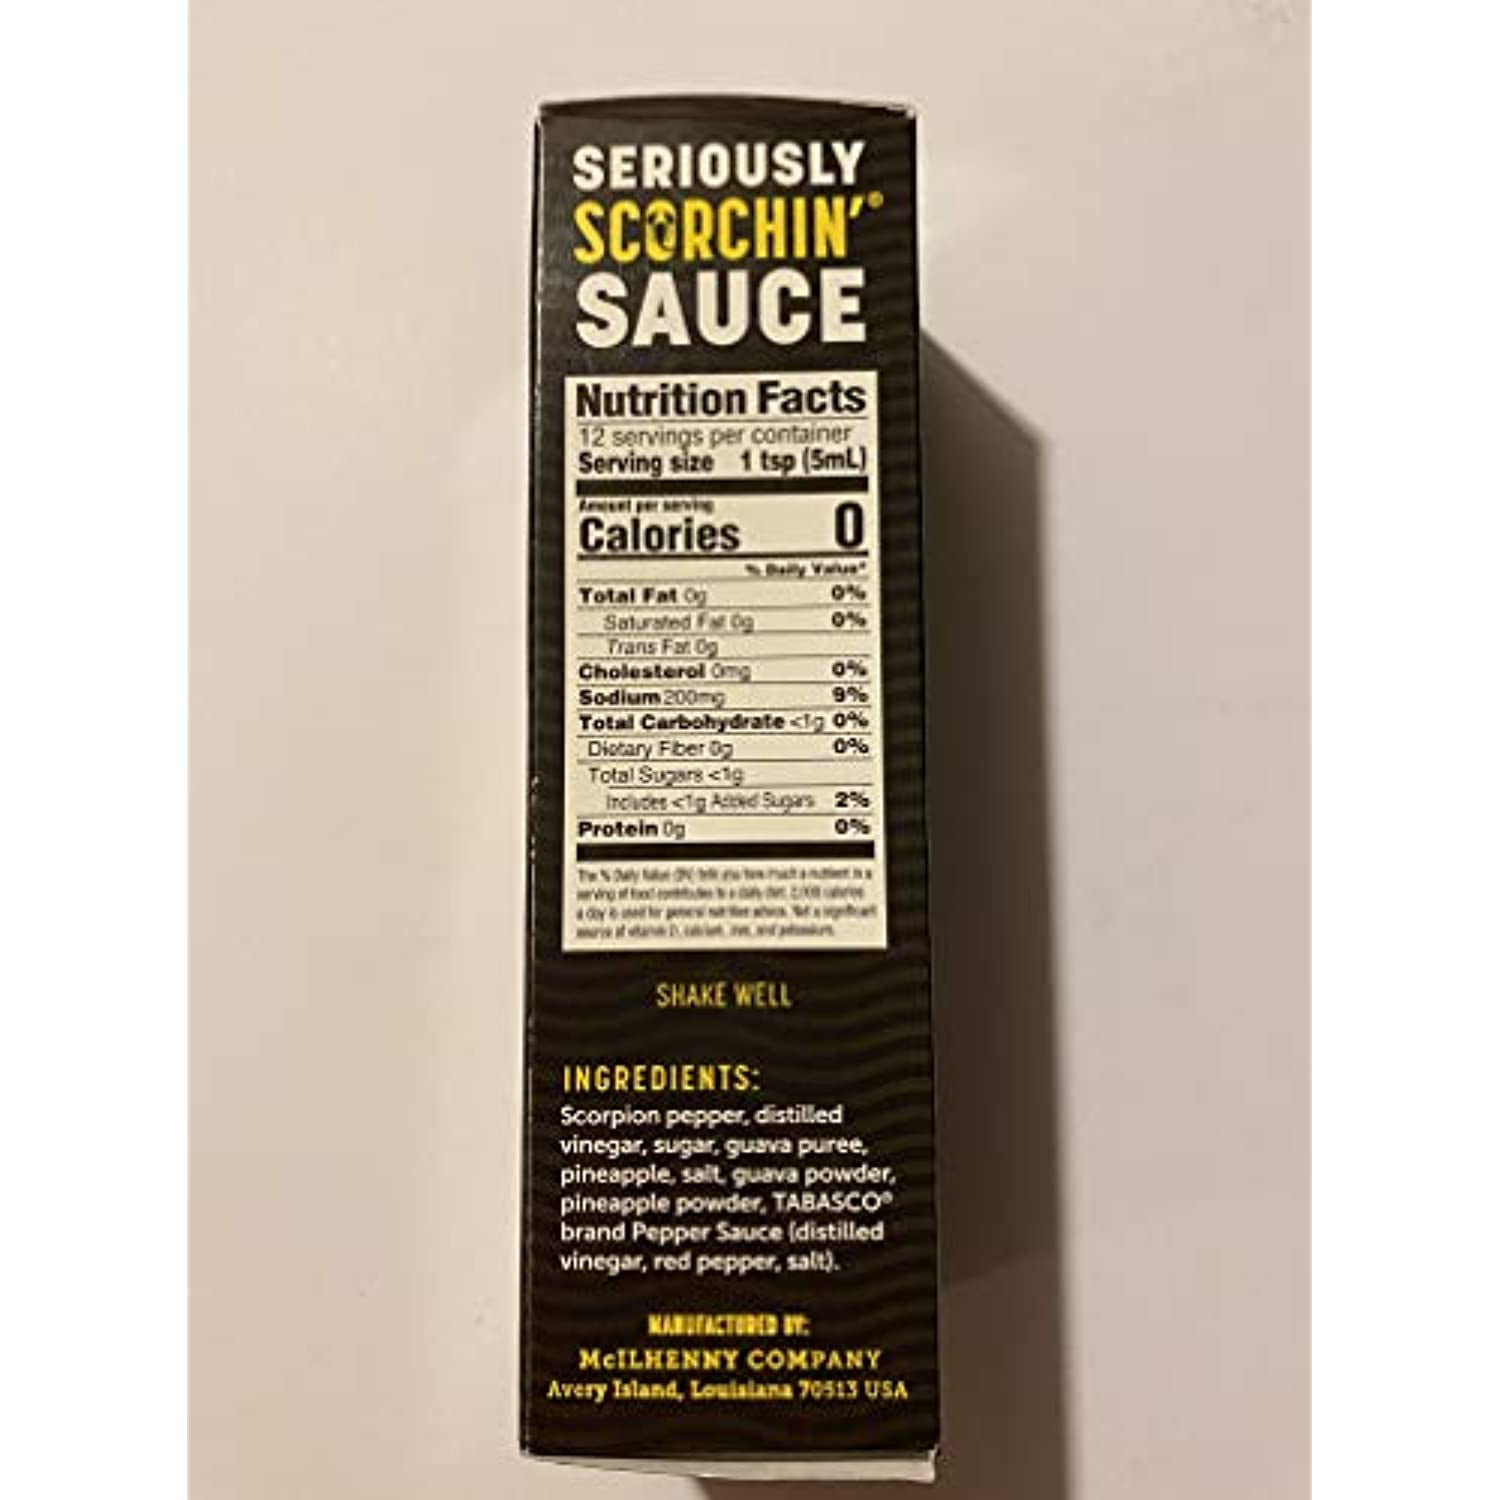 Tabasco Scorpion Hot Sauce (5 Ounce) 